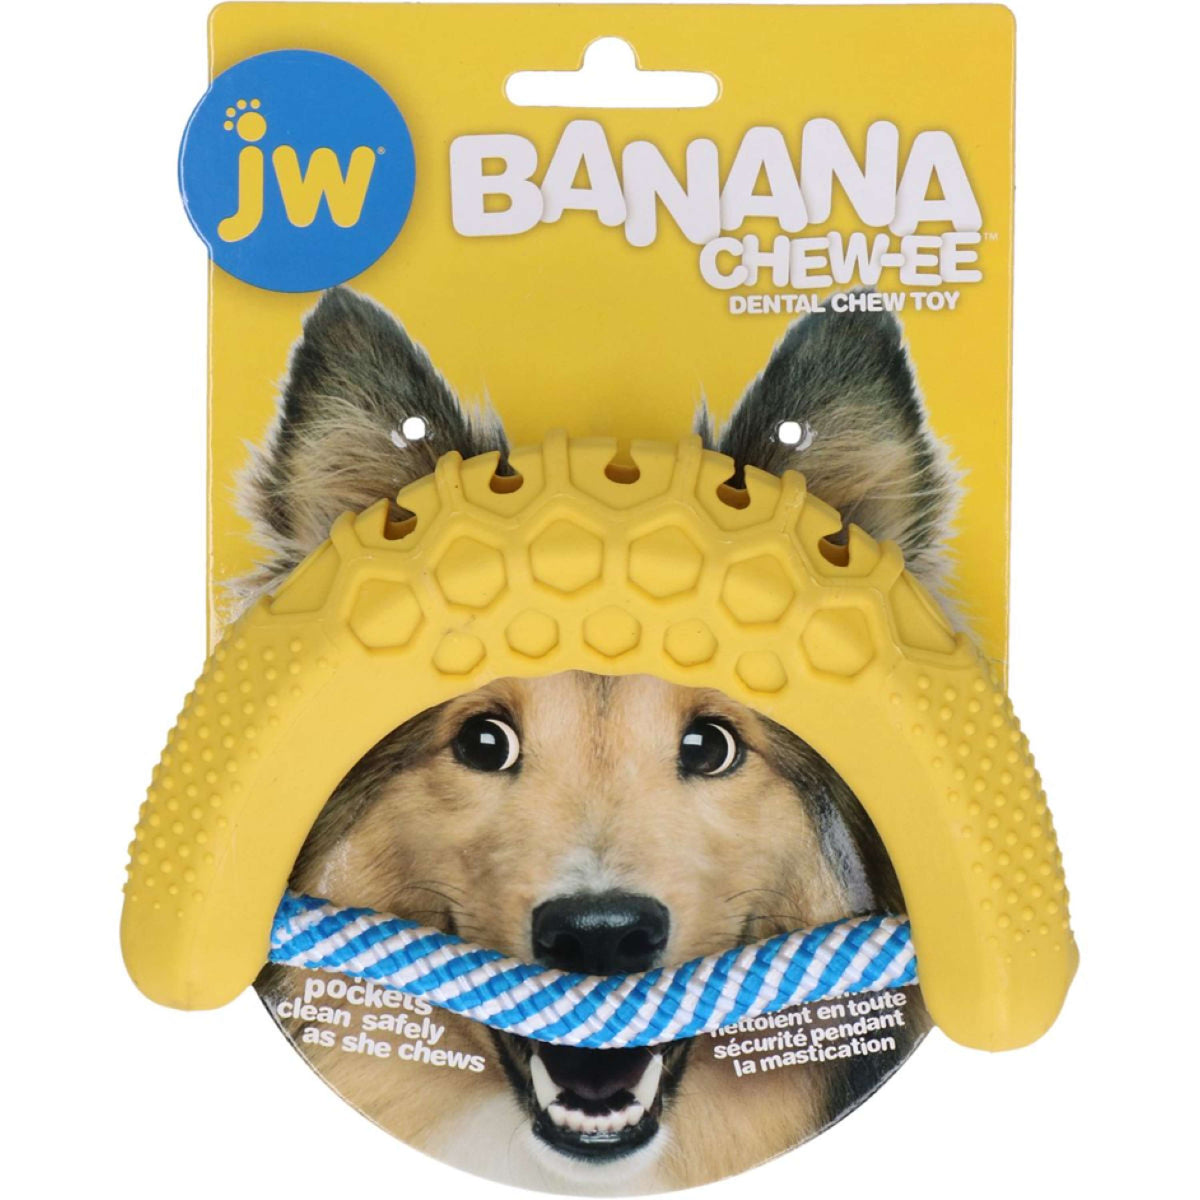 JW Kauspielzeug Banana chew-ee